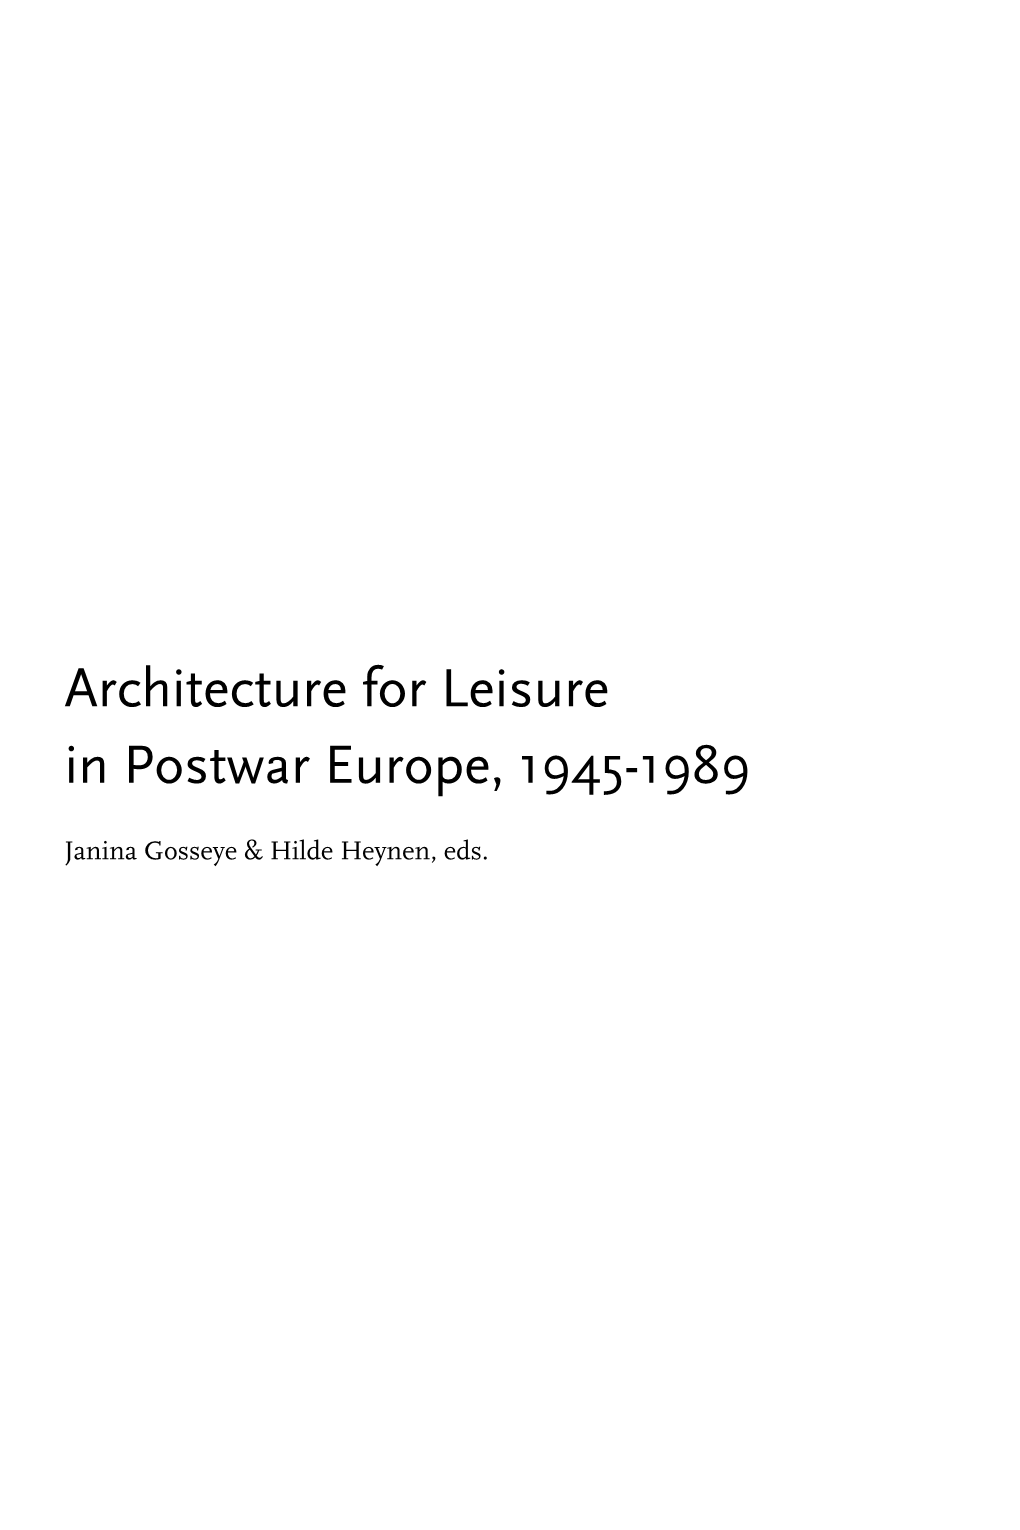 Architecture for Leisure in Postwar Europe, 1945-1989